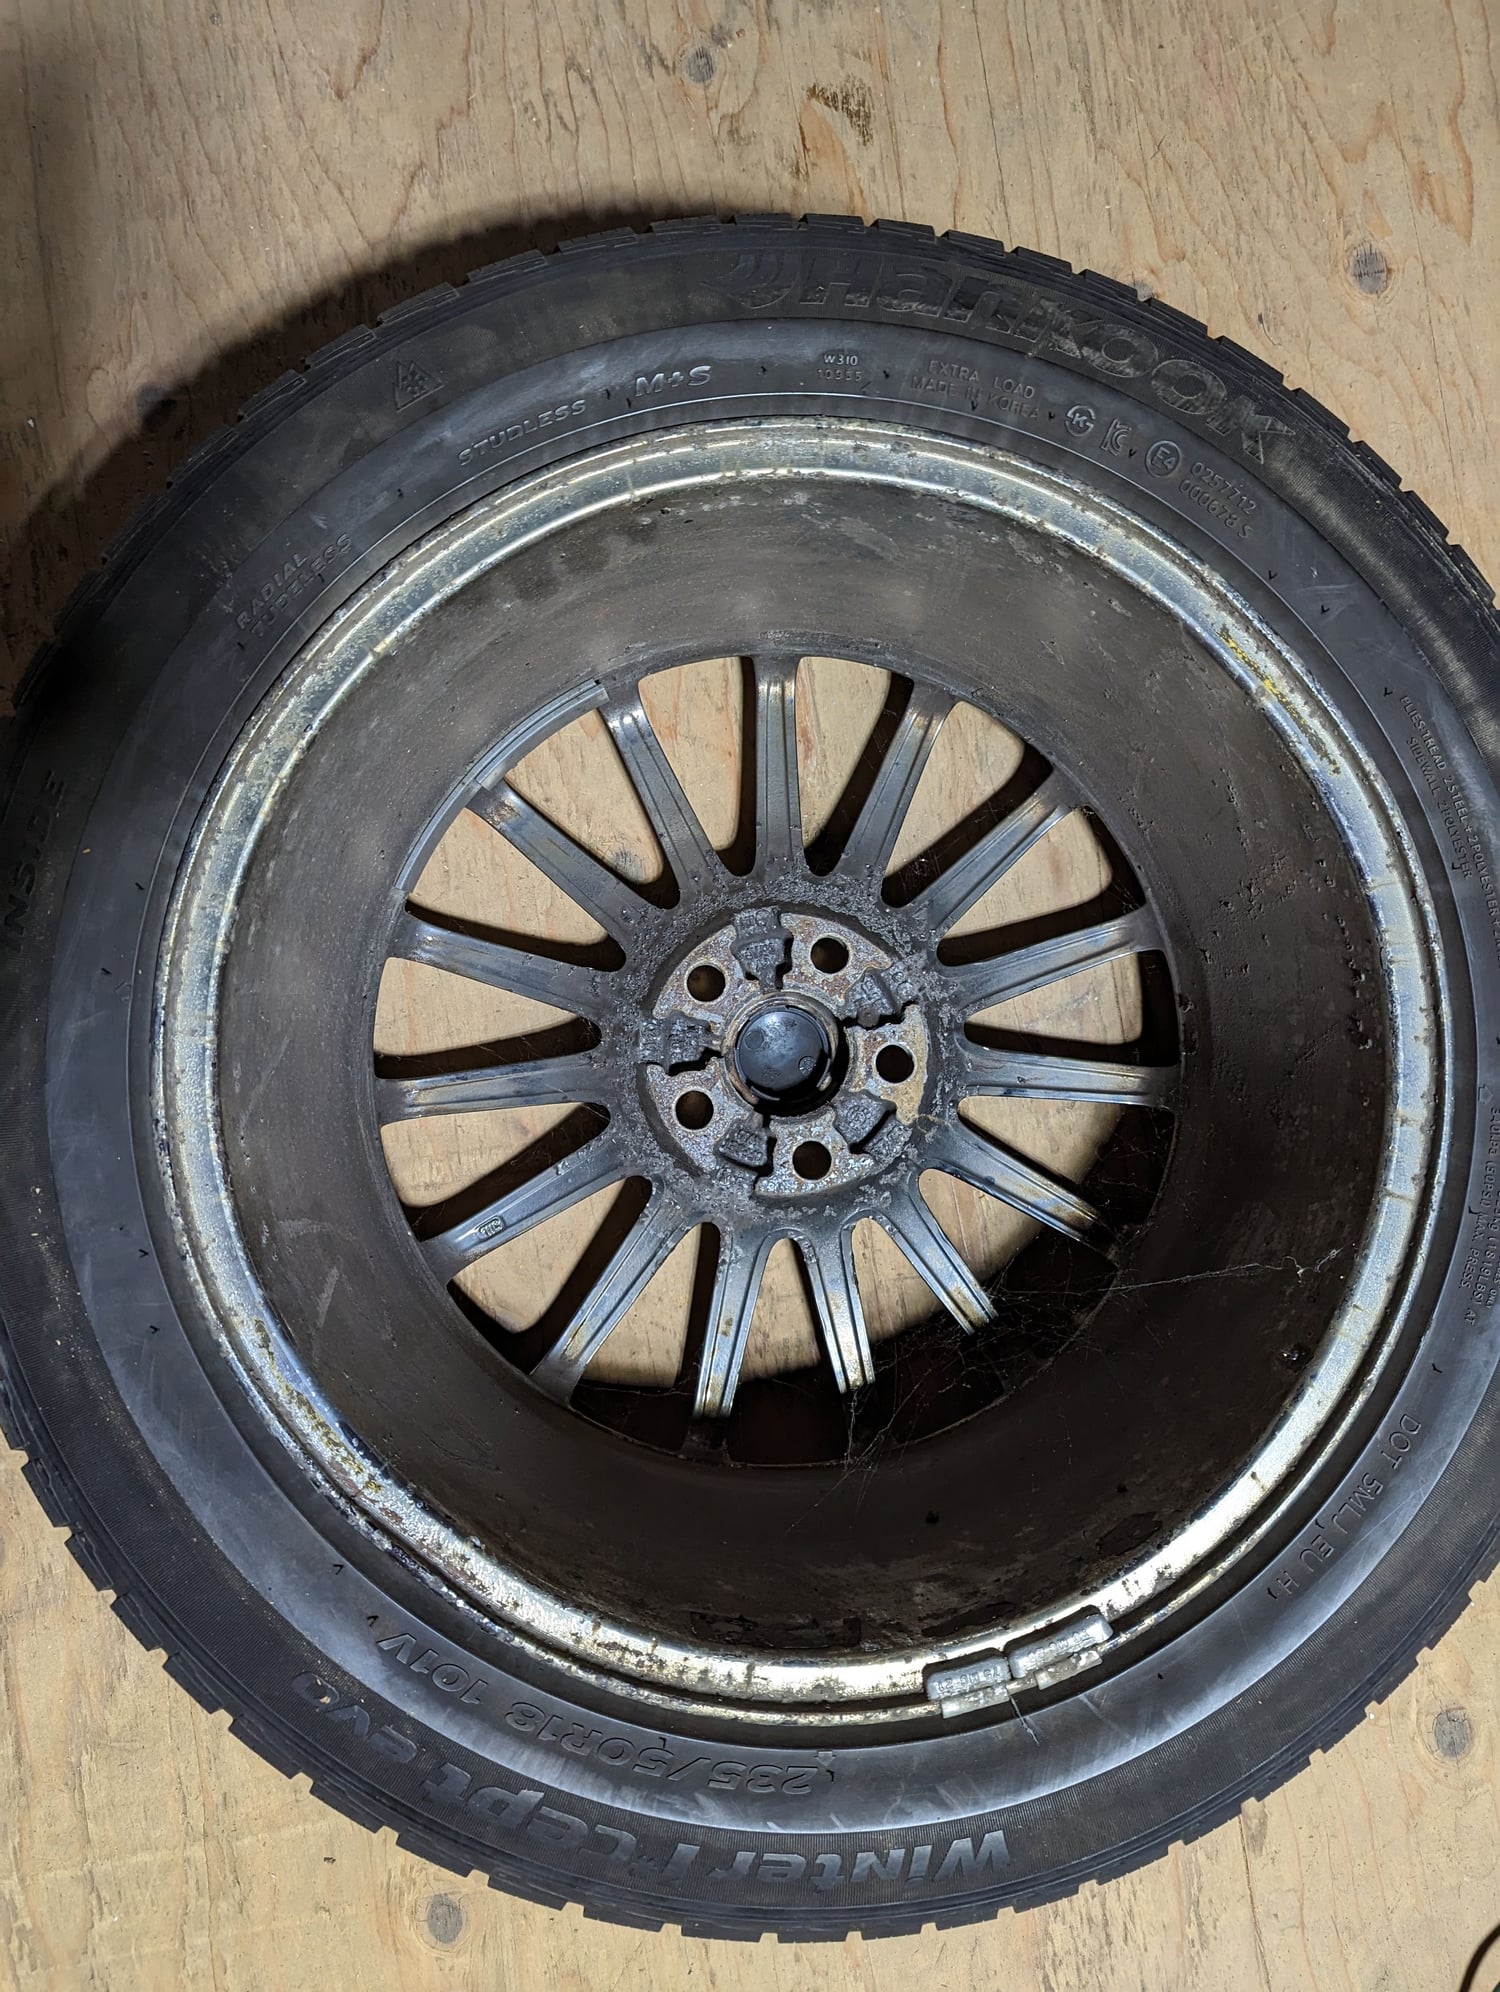 Wheels and Tires/Axles - XJ8 18” Snow tires & wheels set - Used - 2003 to 2009 Jaguar XJ8 - Birmingham, MI 48009, United States